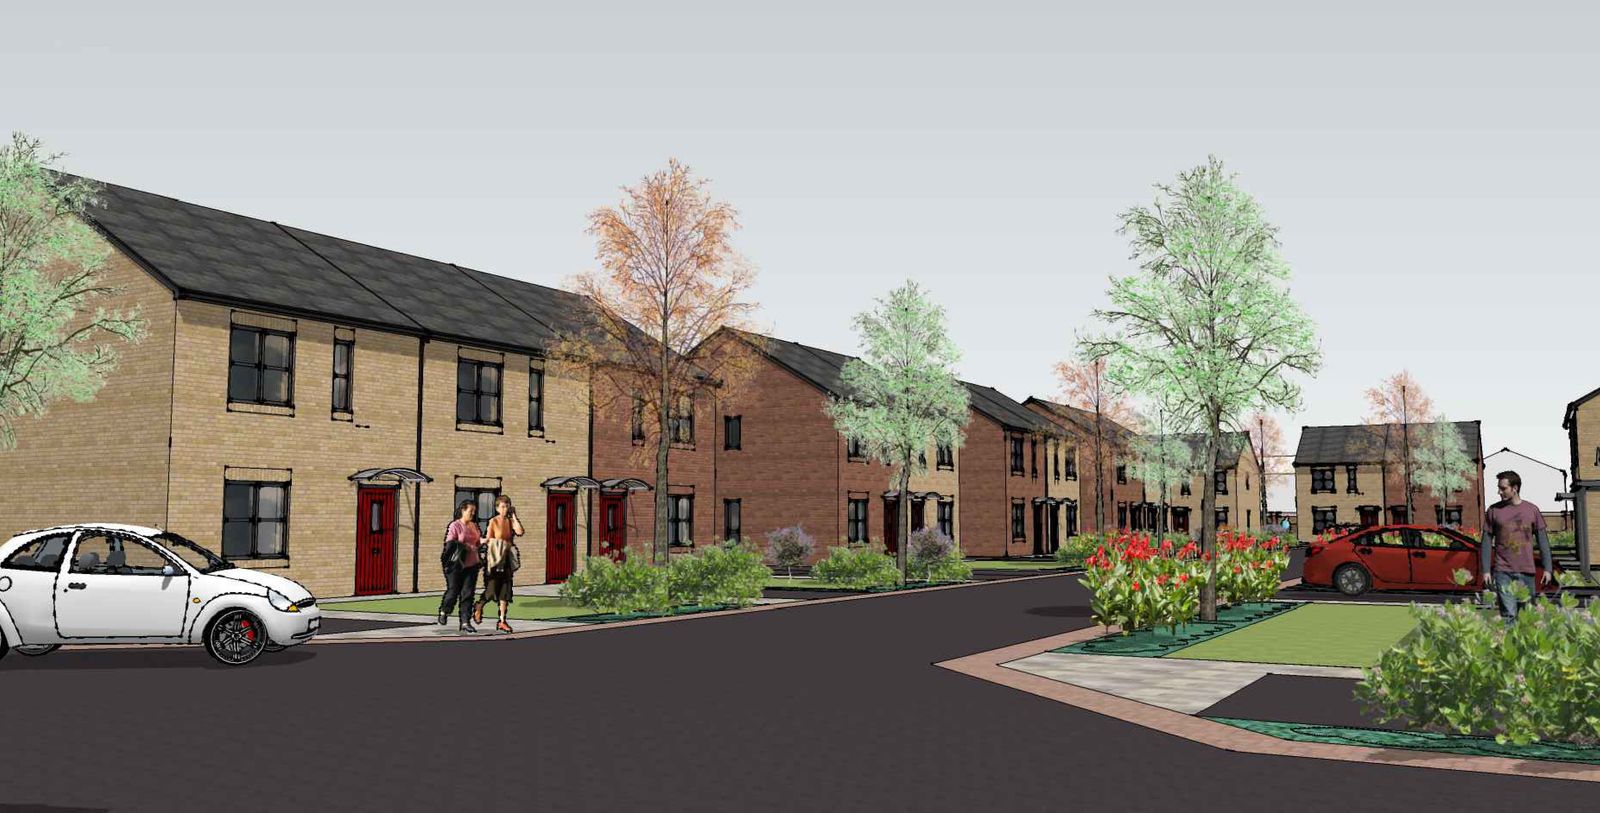 Work starts on £9.2 million affordable housing scheme in Castleford